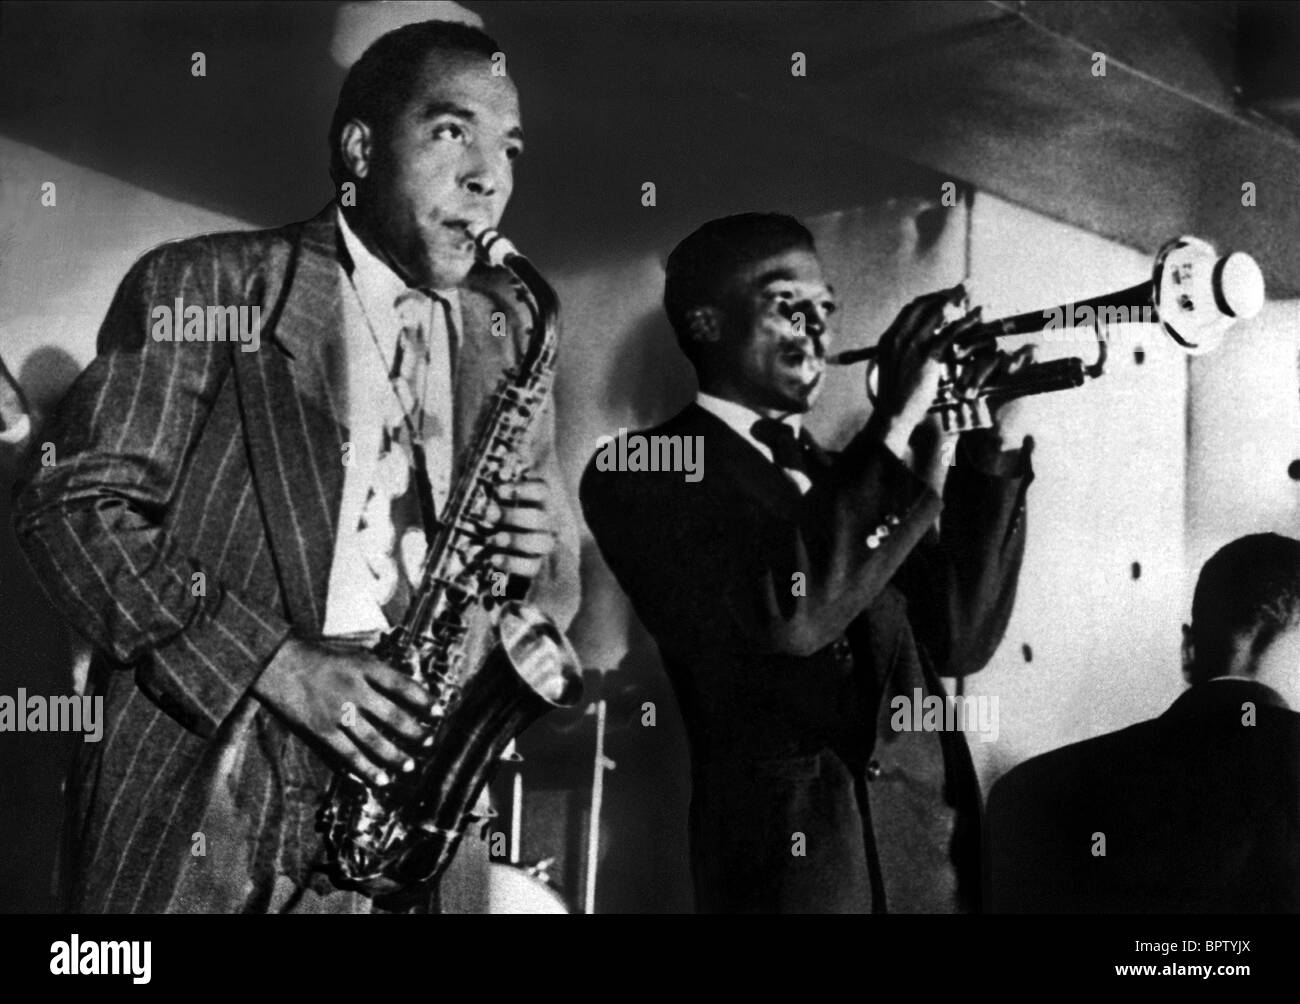 CHARLIE PARKER & MILES DAVIS JAZZ MUSICIANS (1945) Stock Photo